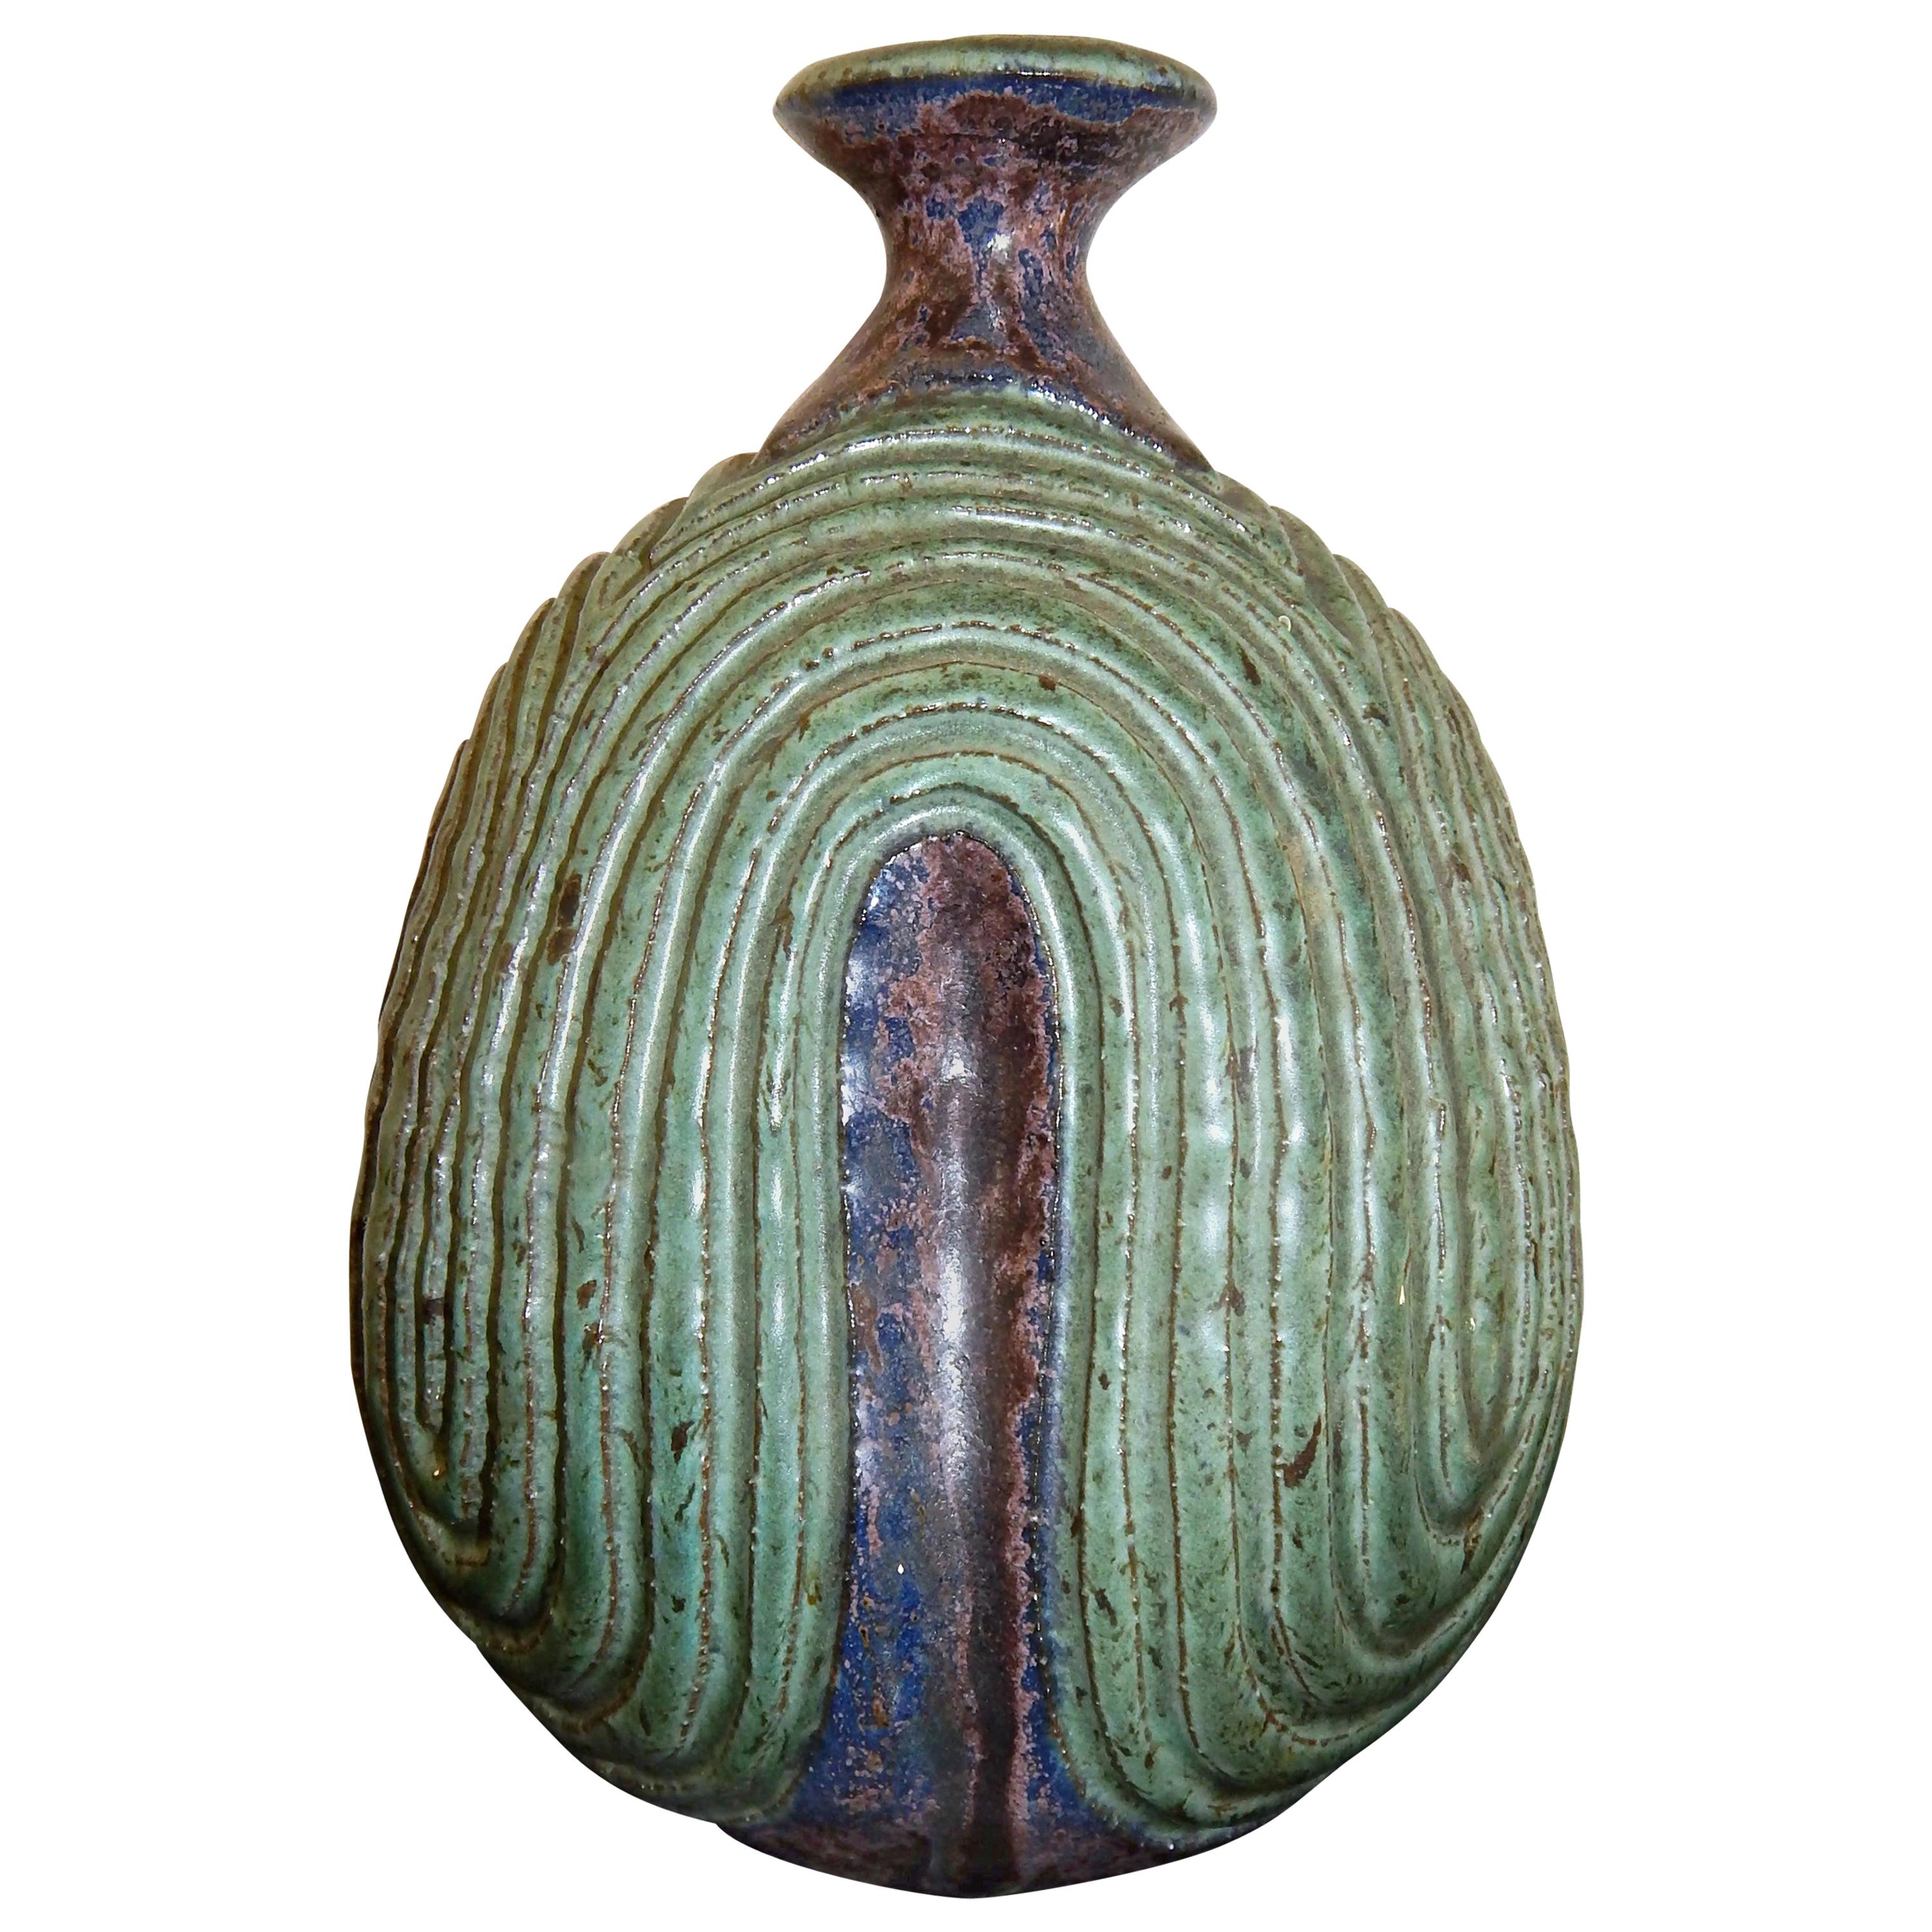 Maurice Grossman Studio Pottery Vase